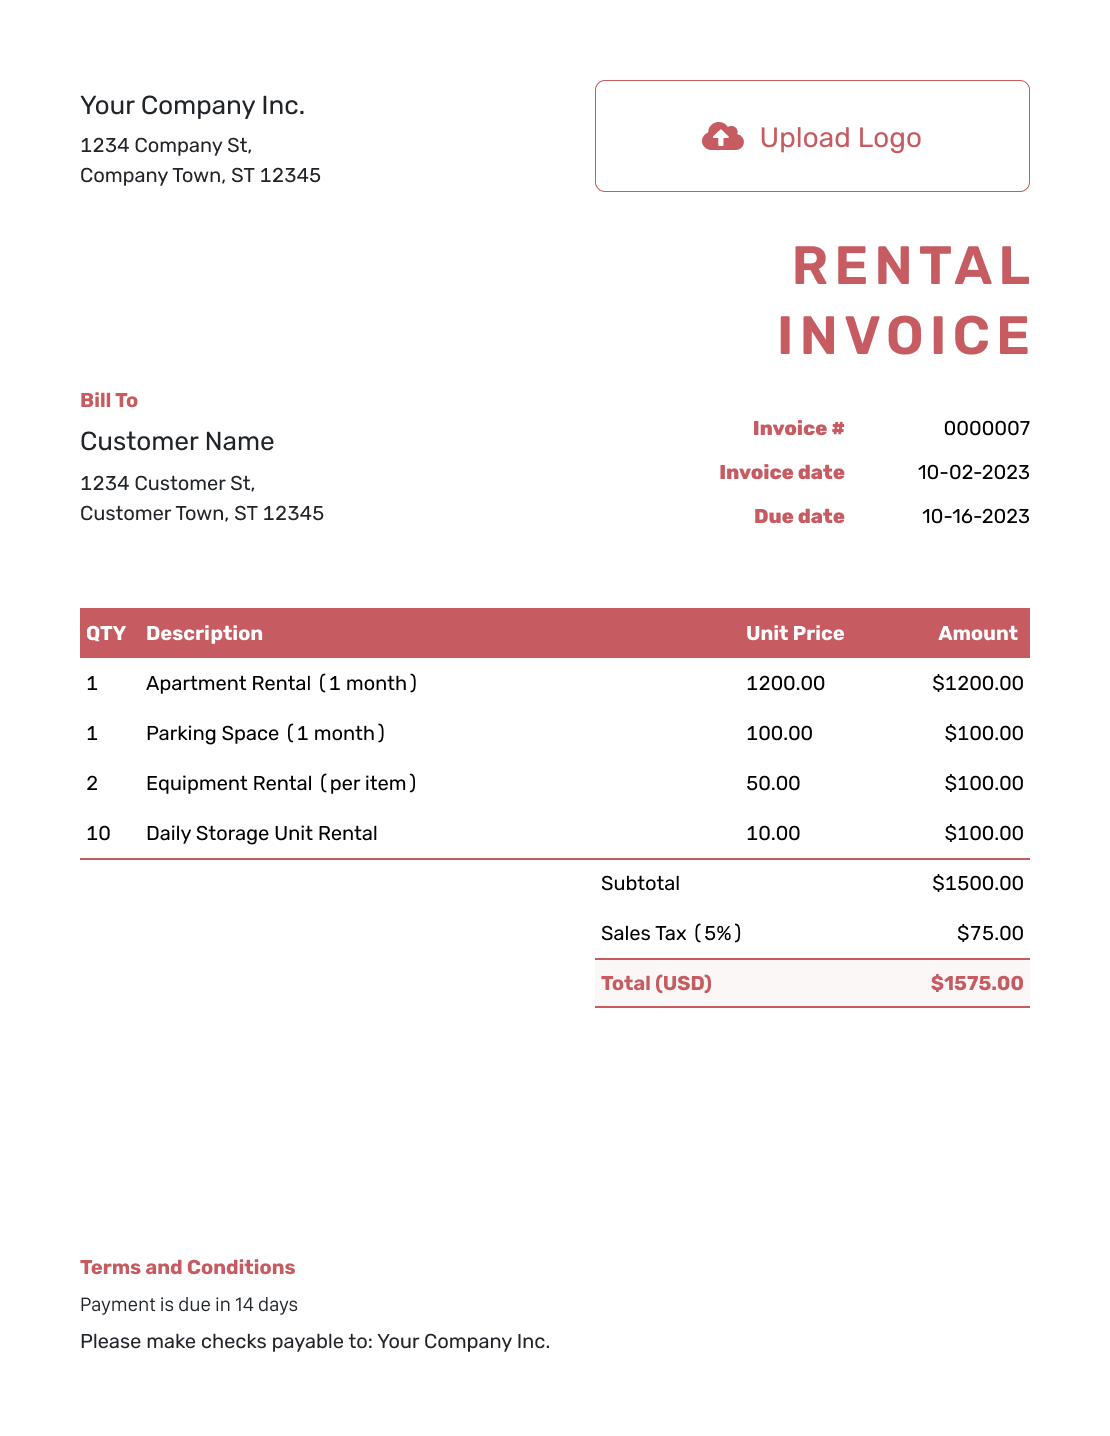 Itemized Rental Invoice Template